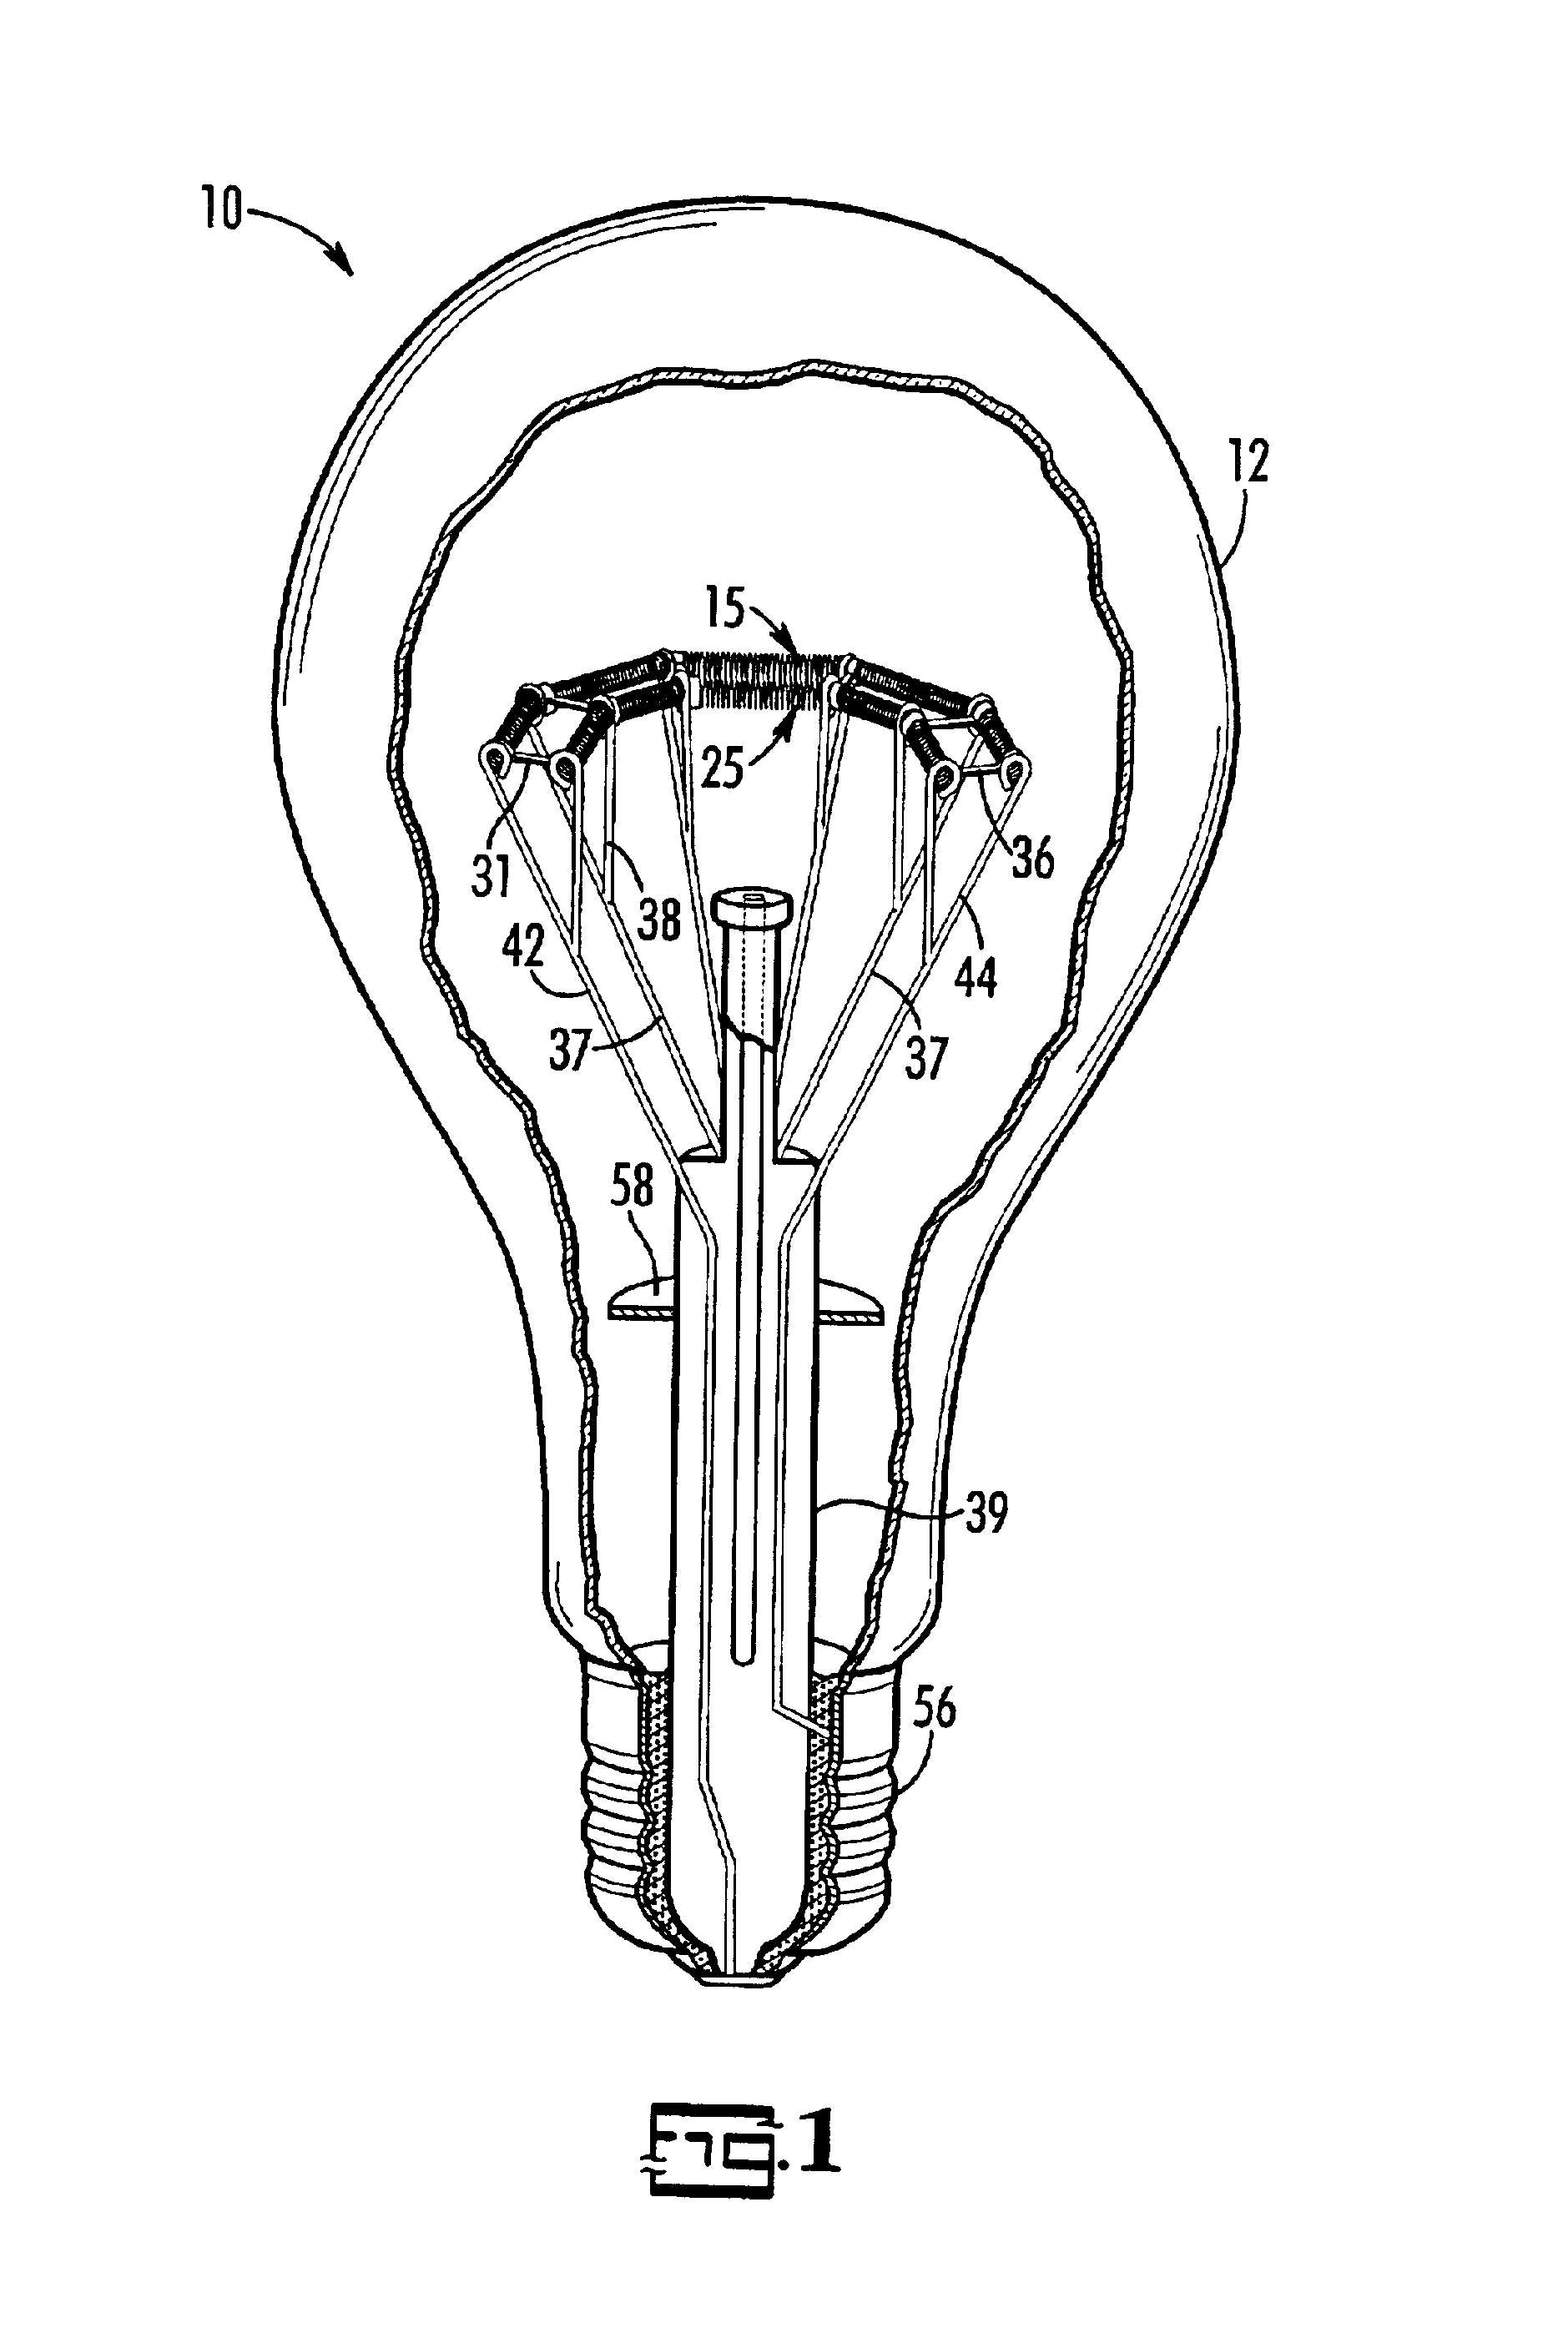 Multiple, parallel filament lamp